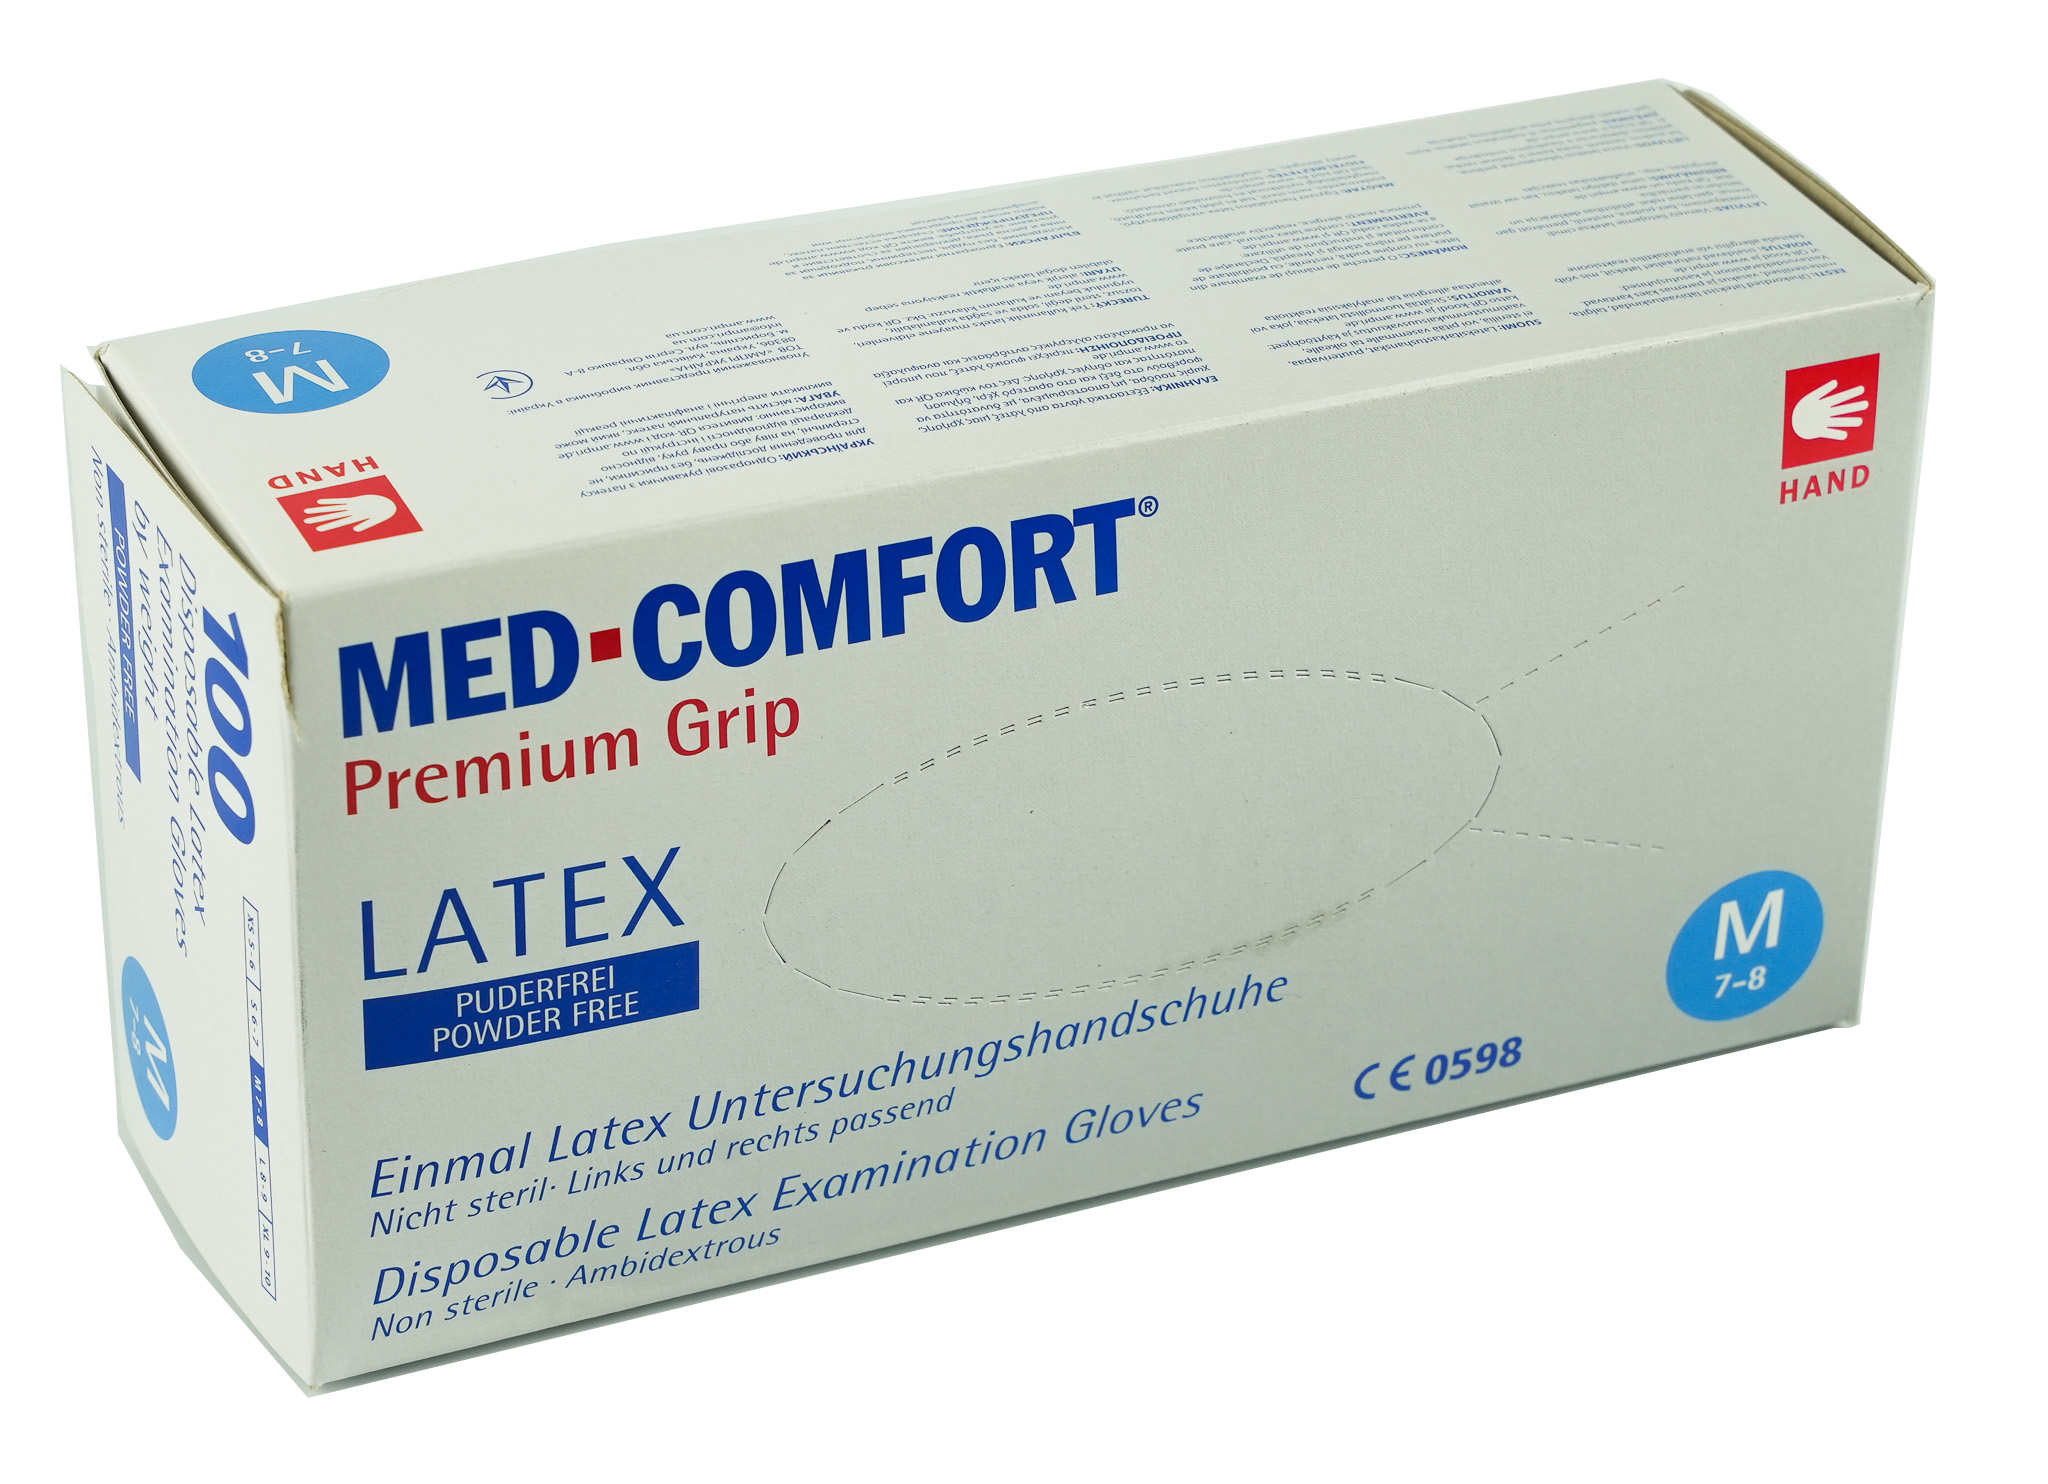 Med-Comfort Premium Grip Gr.M Latex puderfrei, 100 Stk.